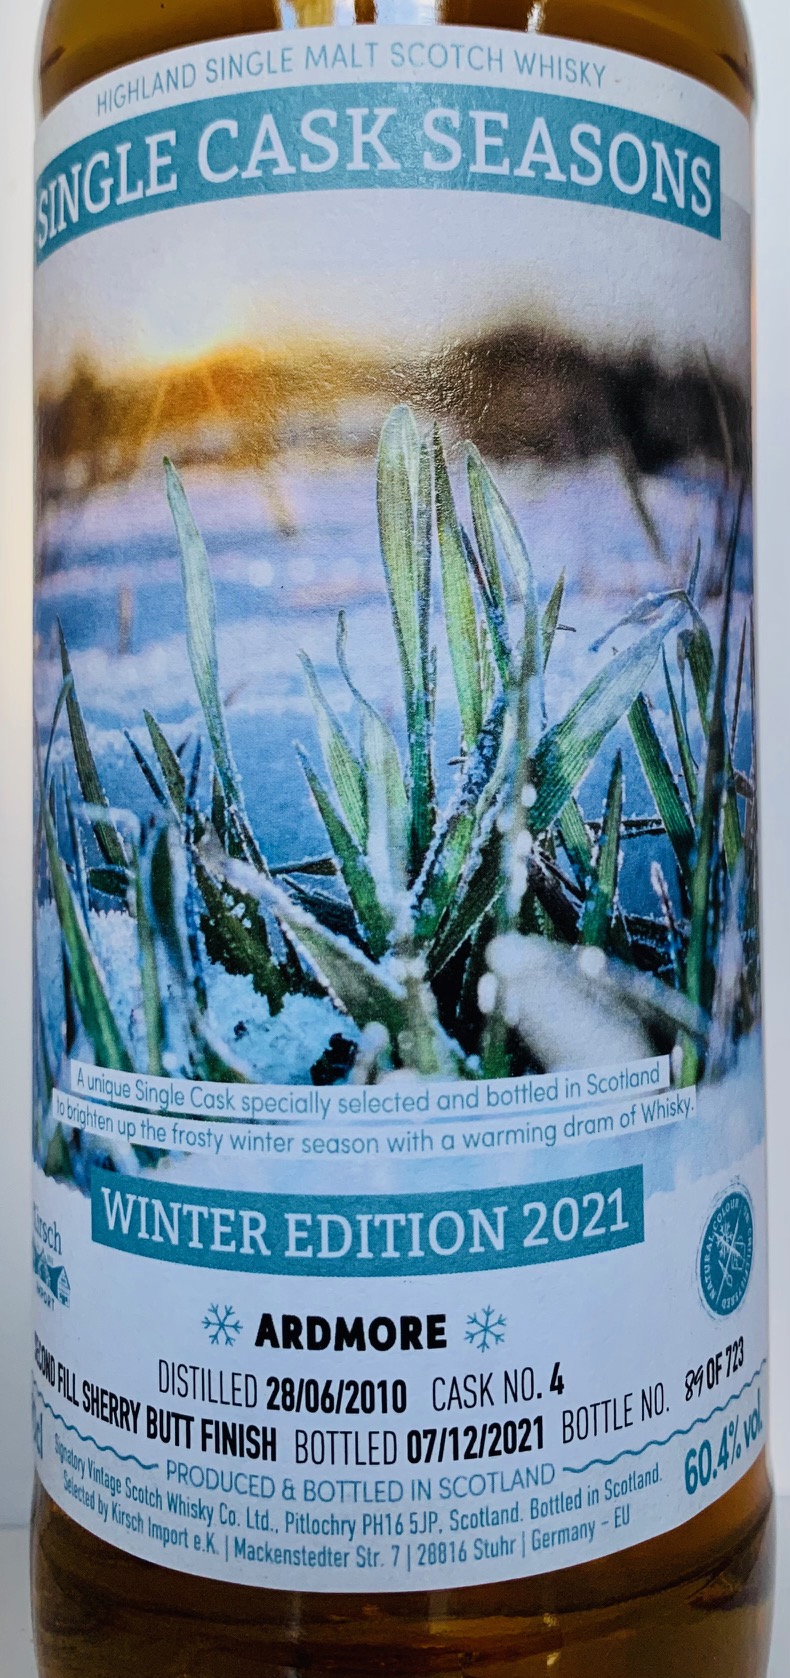 Ardmore 2010/2021 Single Cask Seasons Winter 2021 #4